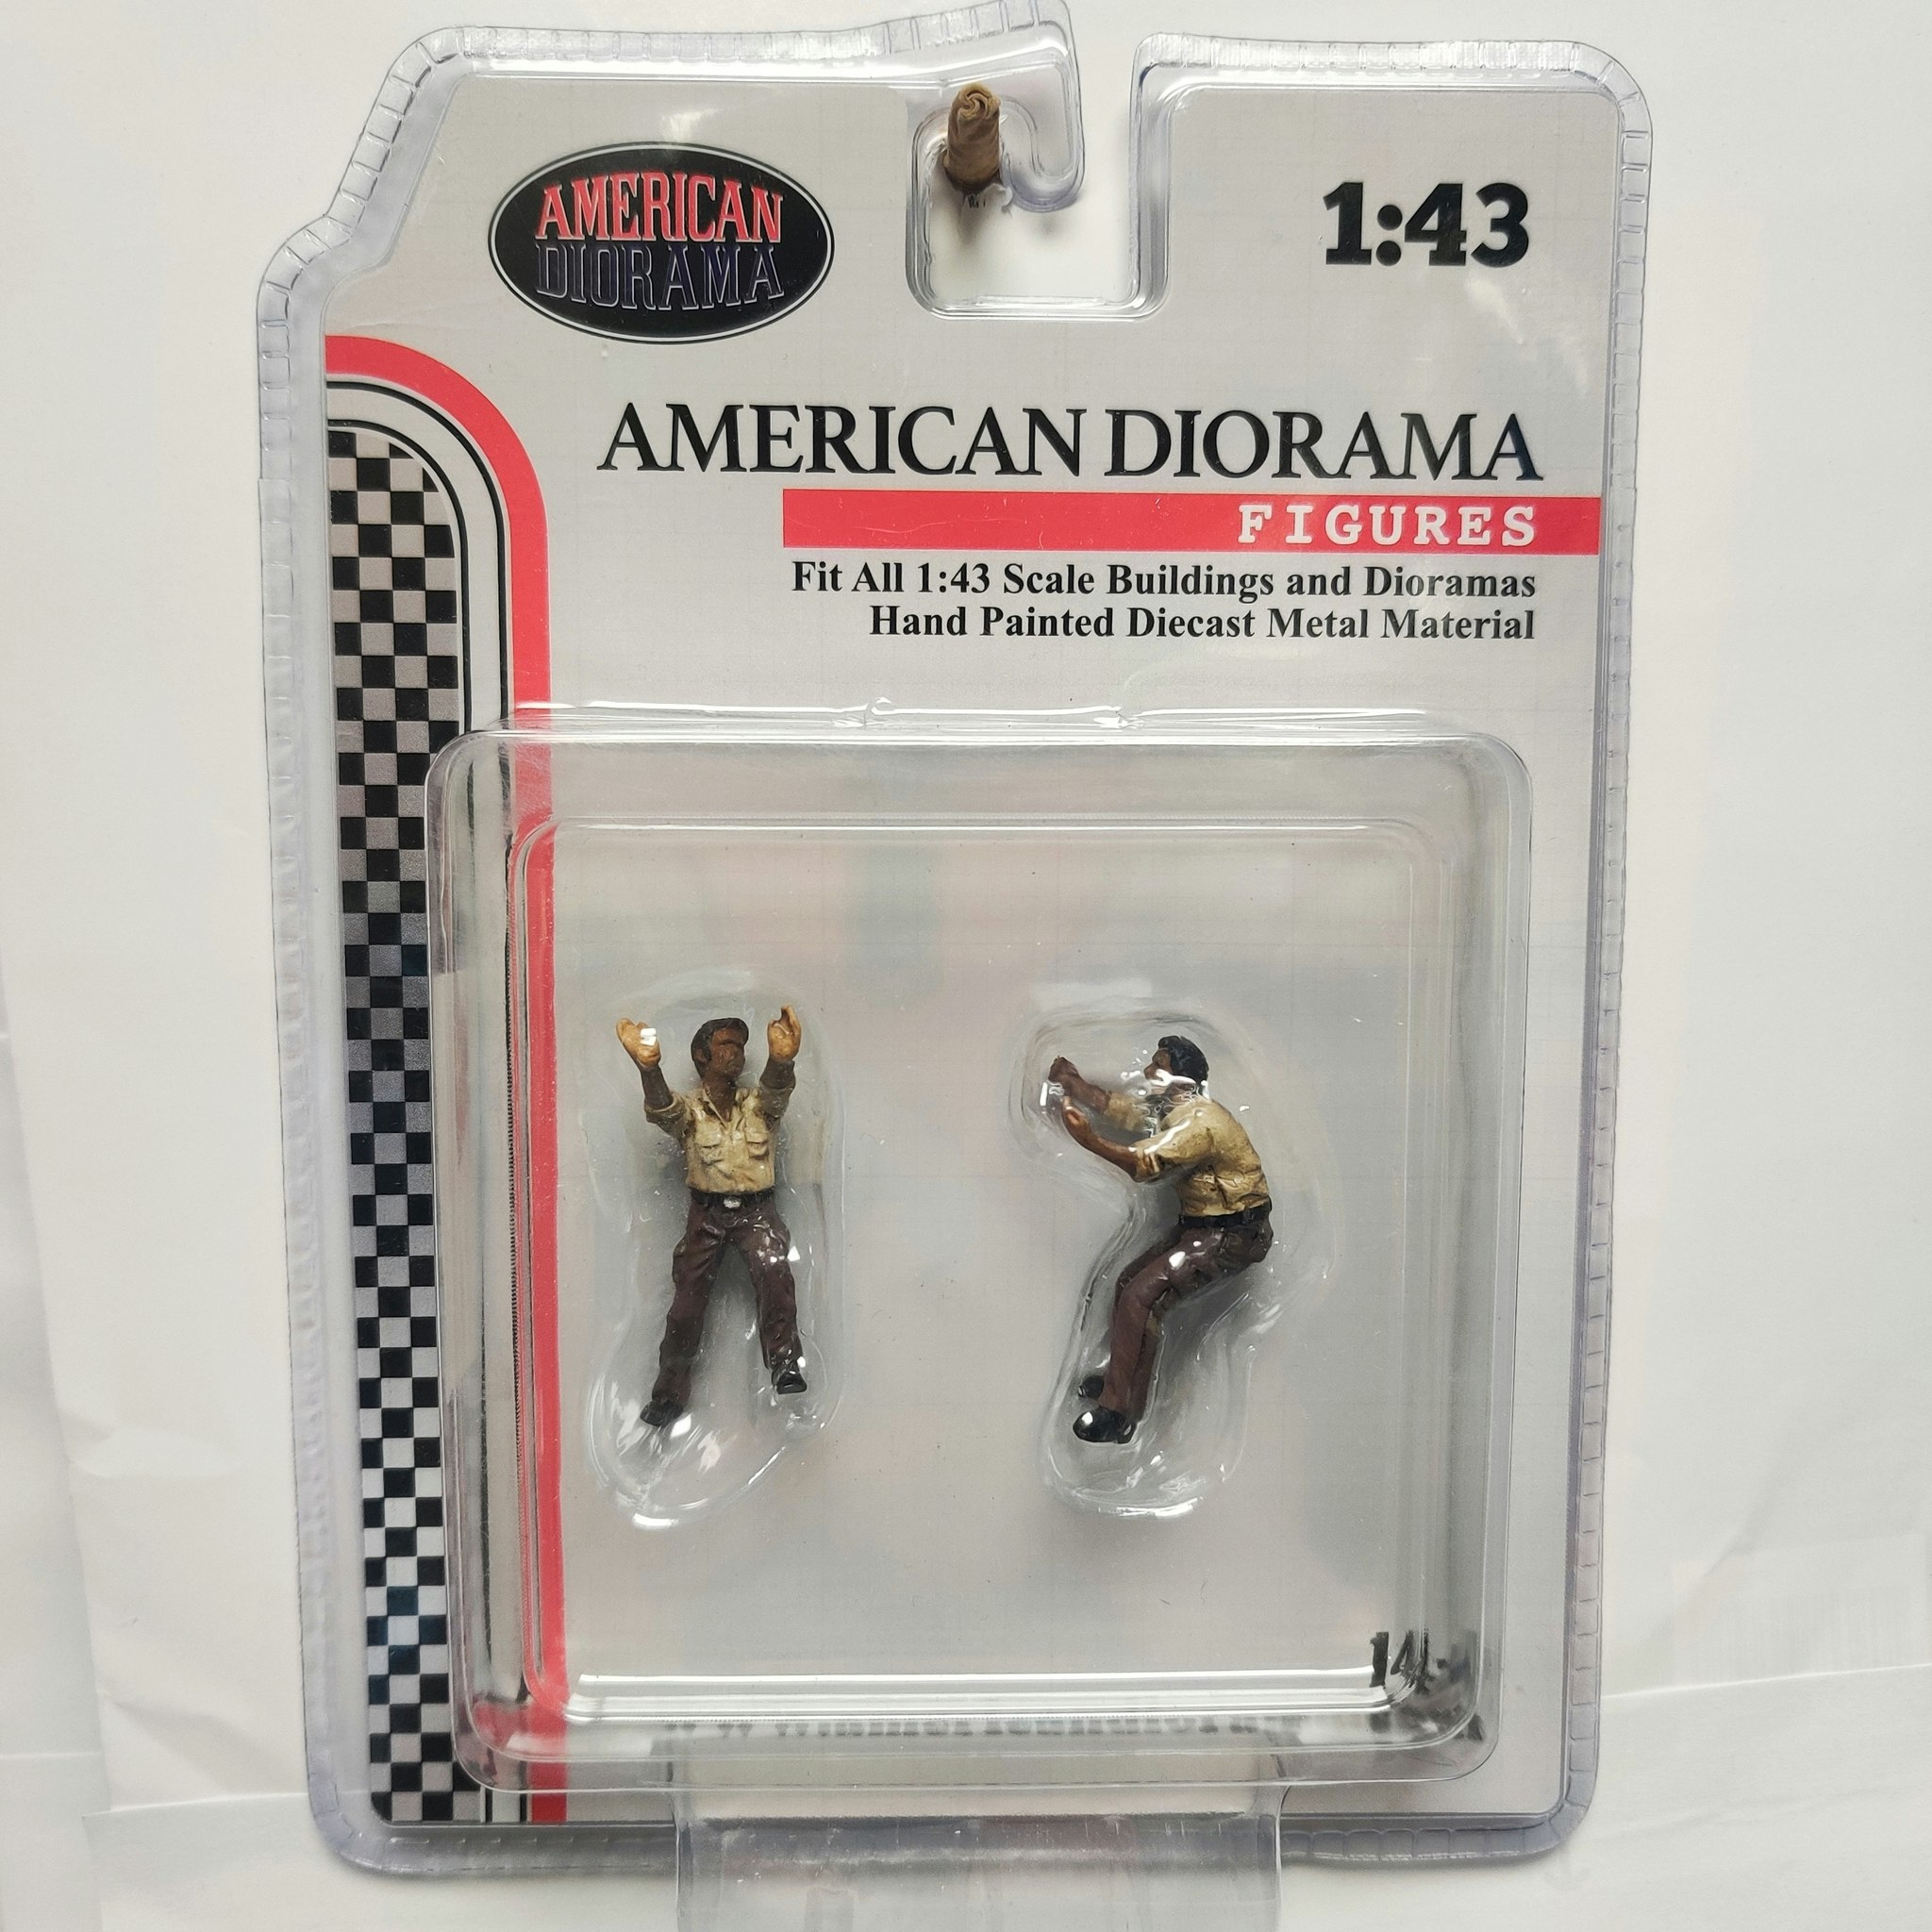 Skala 1/43, AD-43003 Mekaniker 4x4 Camel Trophy, 2 metal figures fr American Diorama